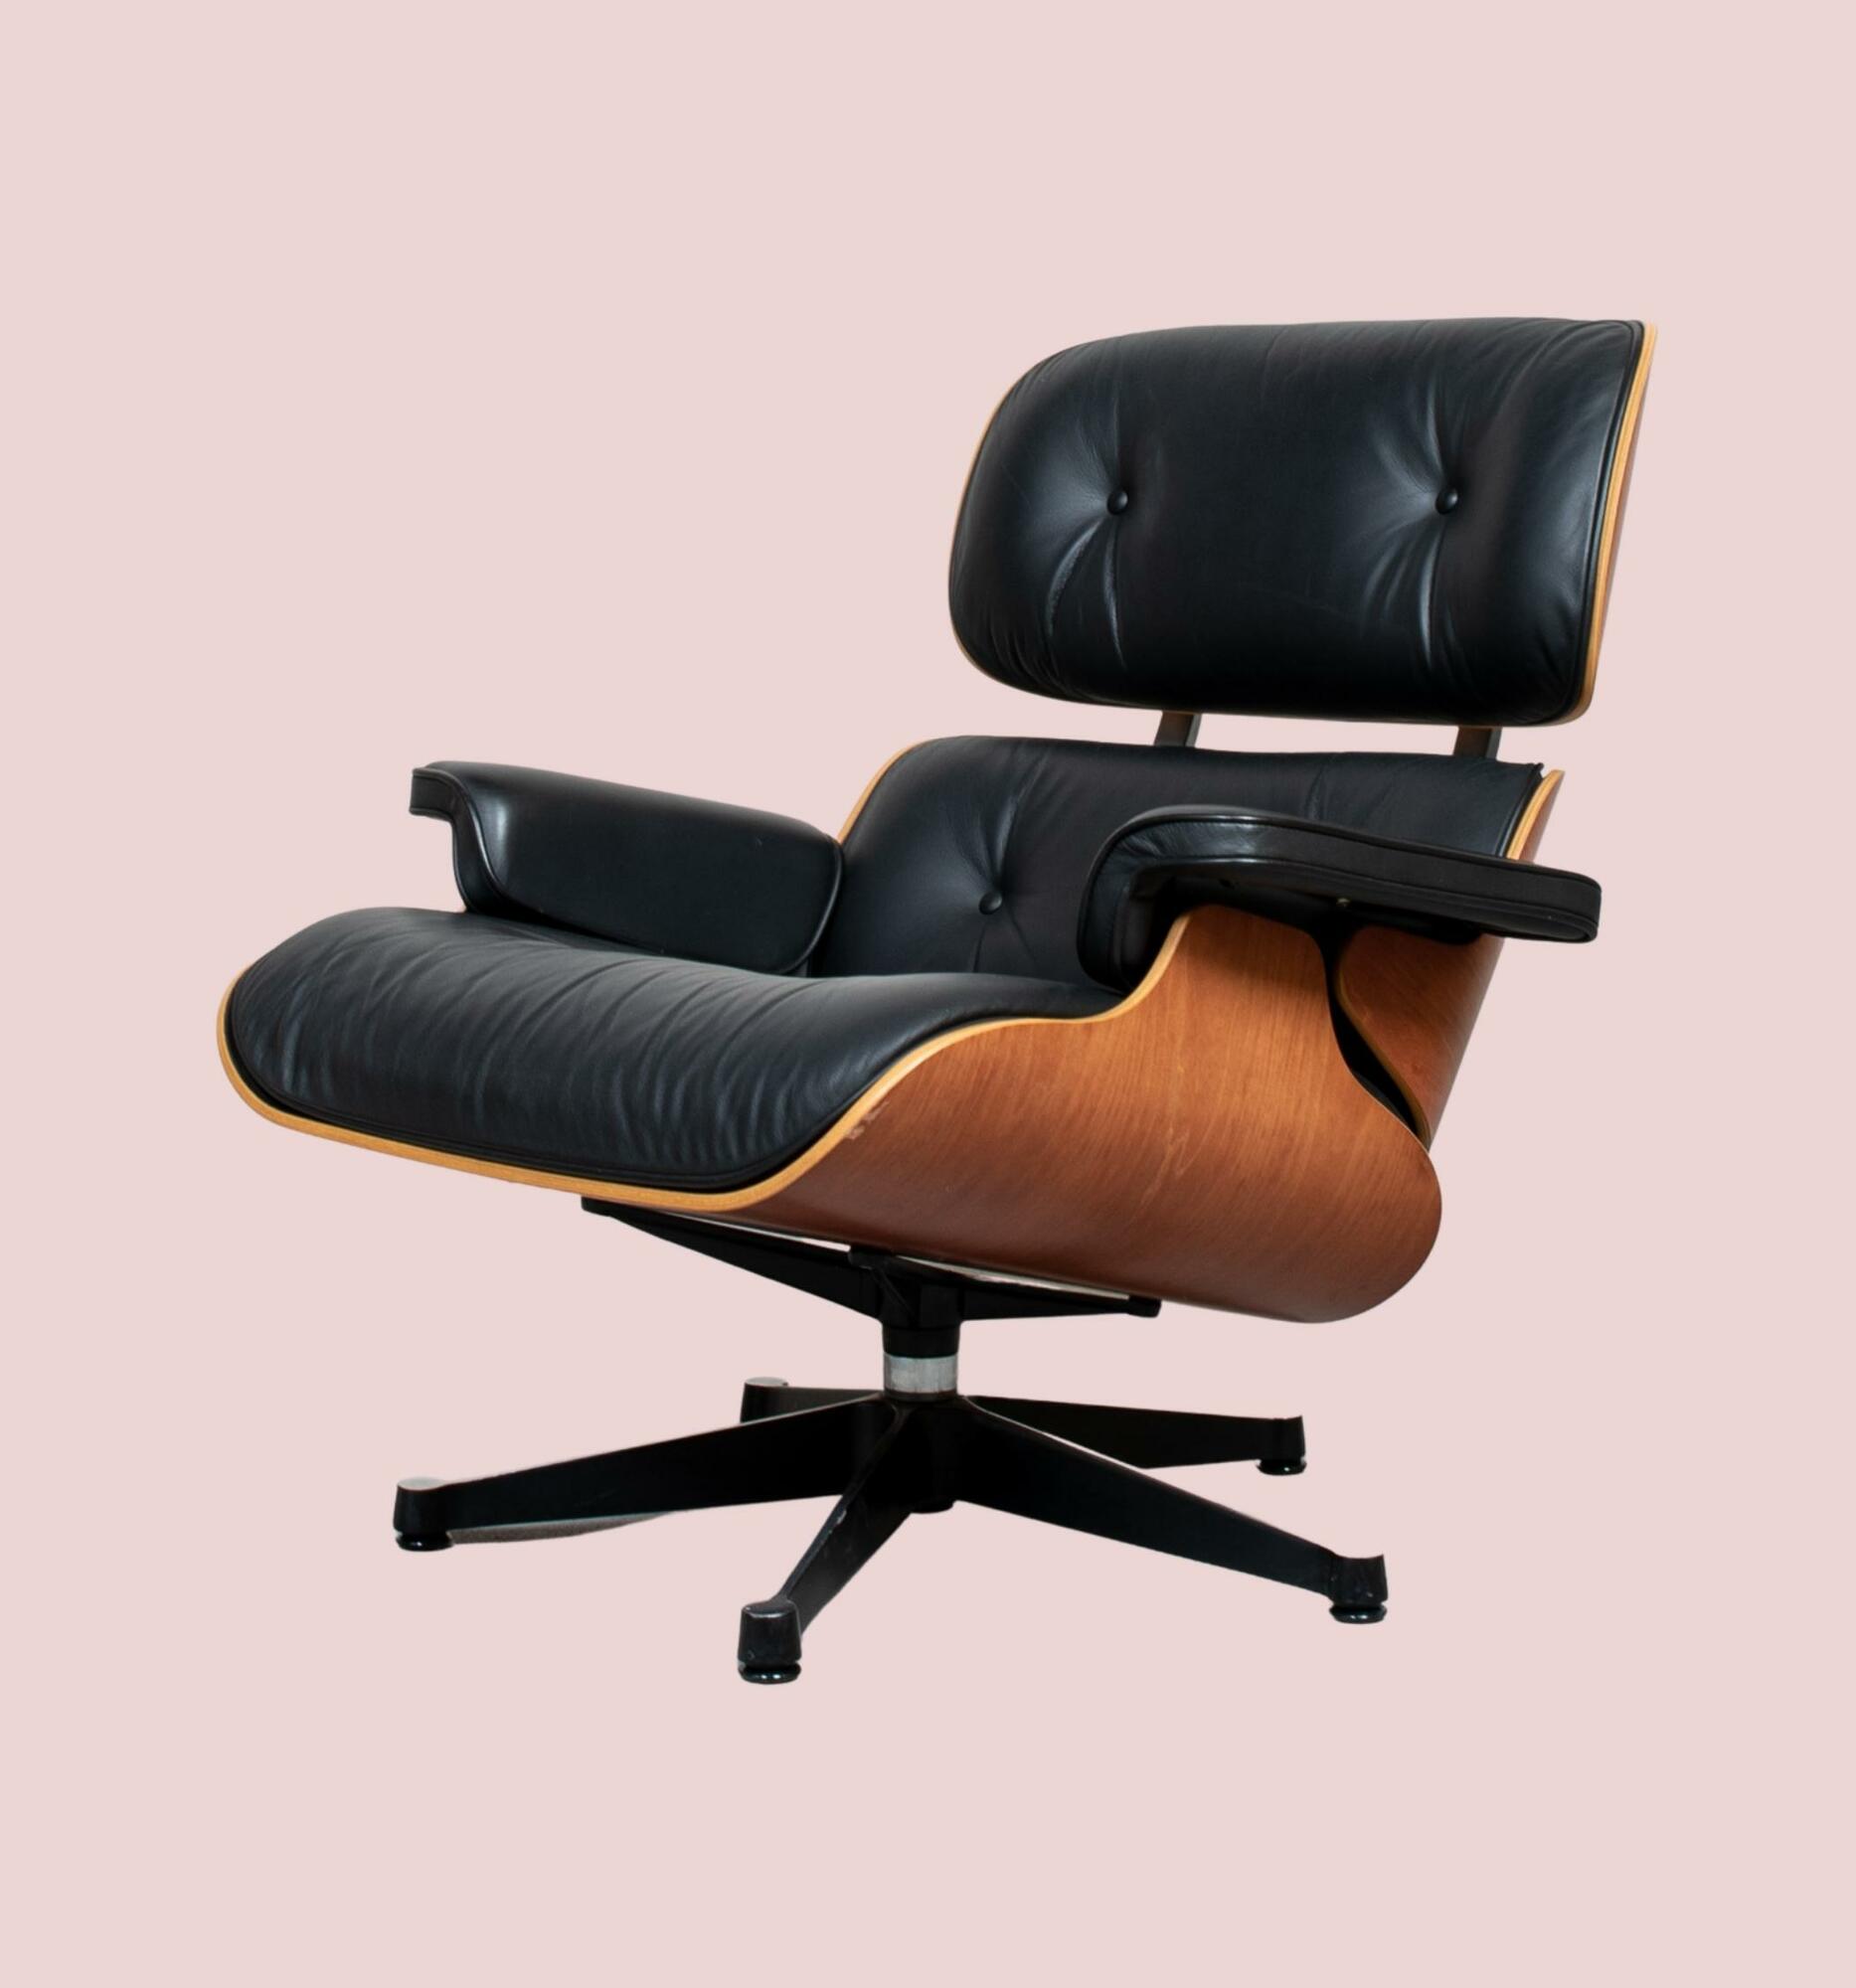 Eames Lounge Chair Vitra schwarzes Leder Palisanderholz 1